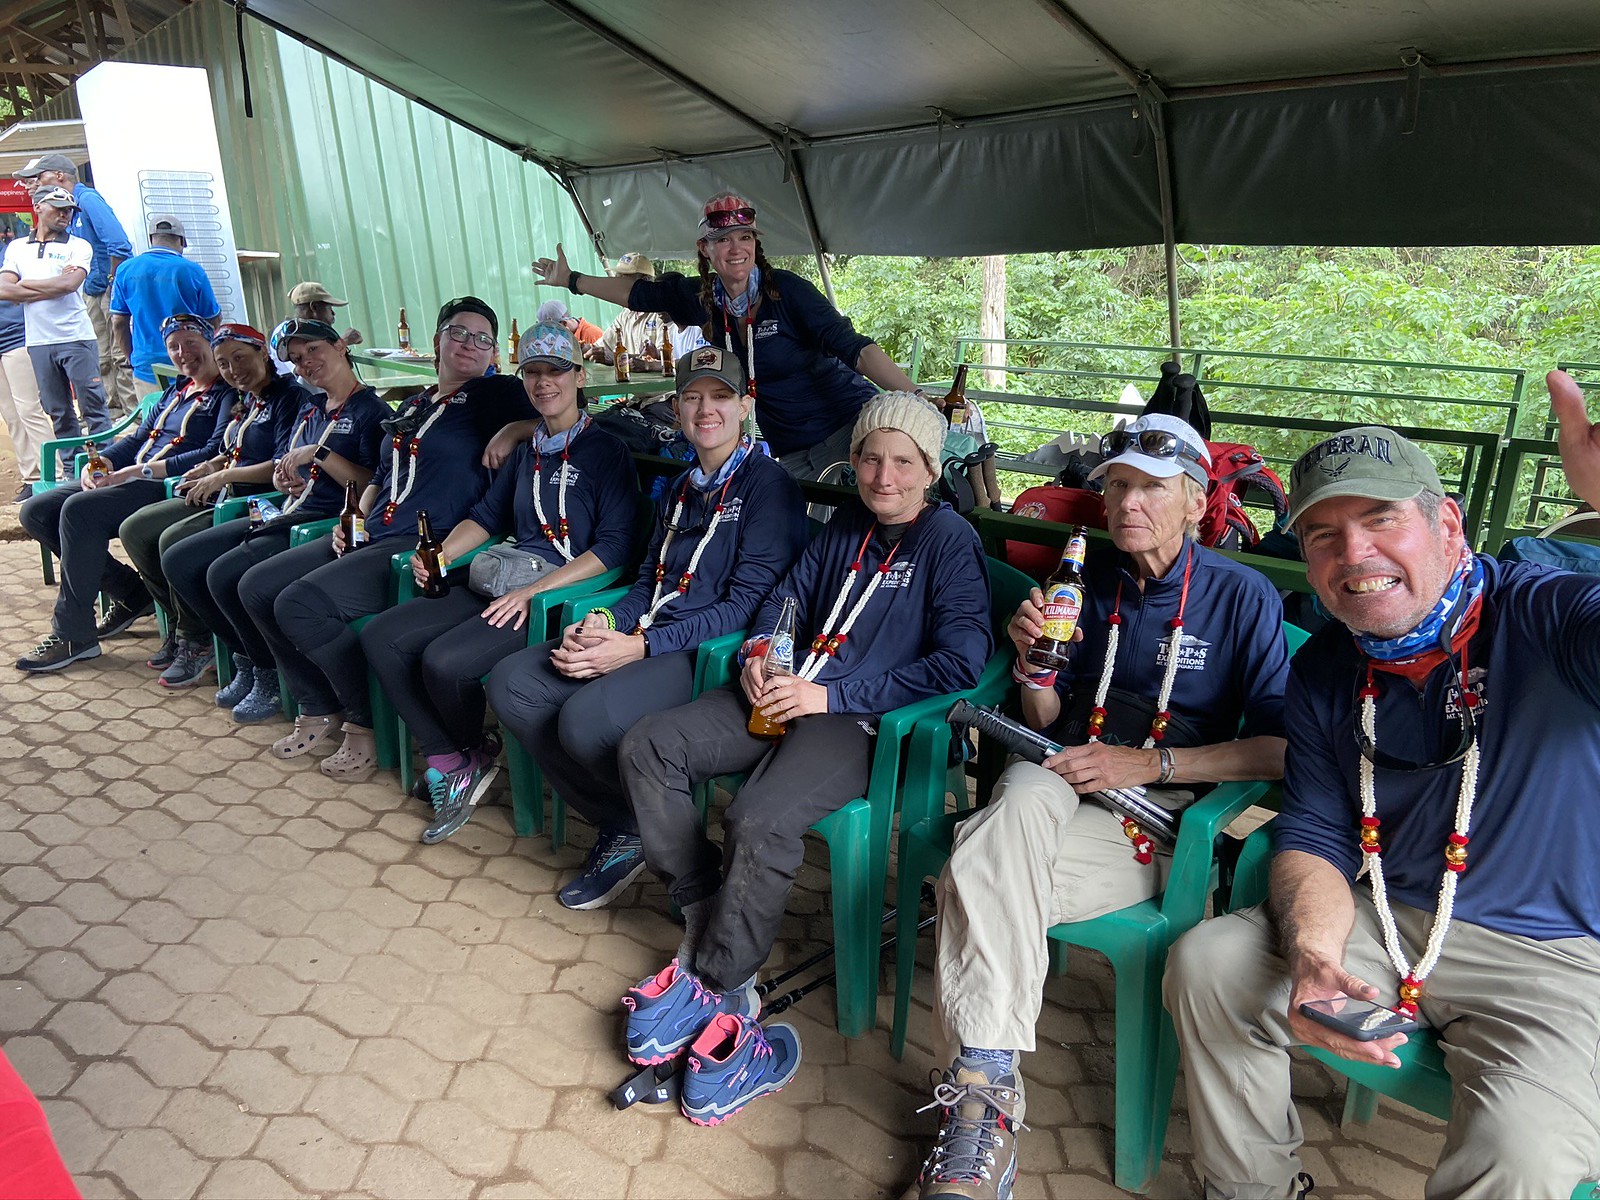 2020_EXPD_Kilimanjaro_Staff 42